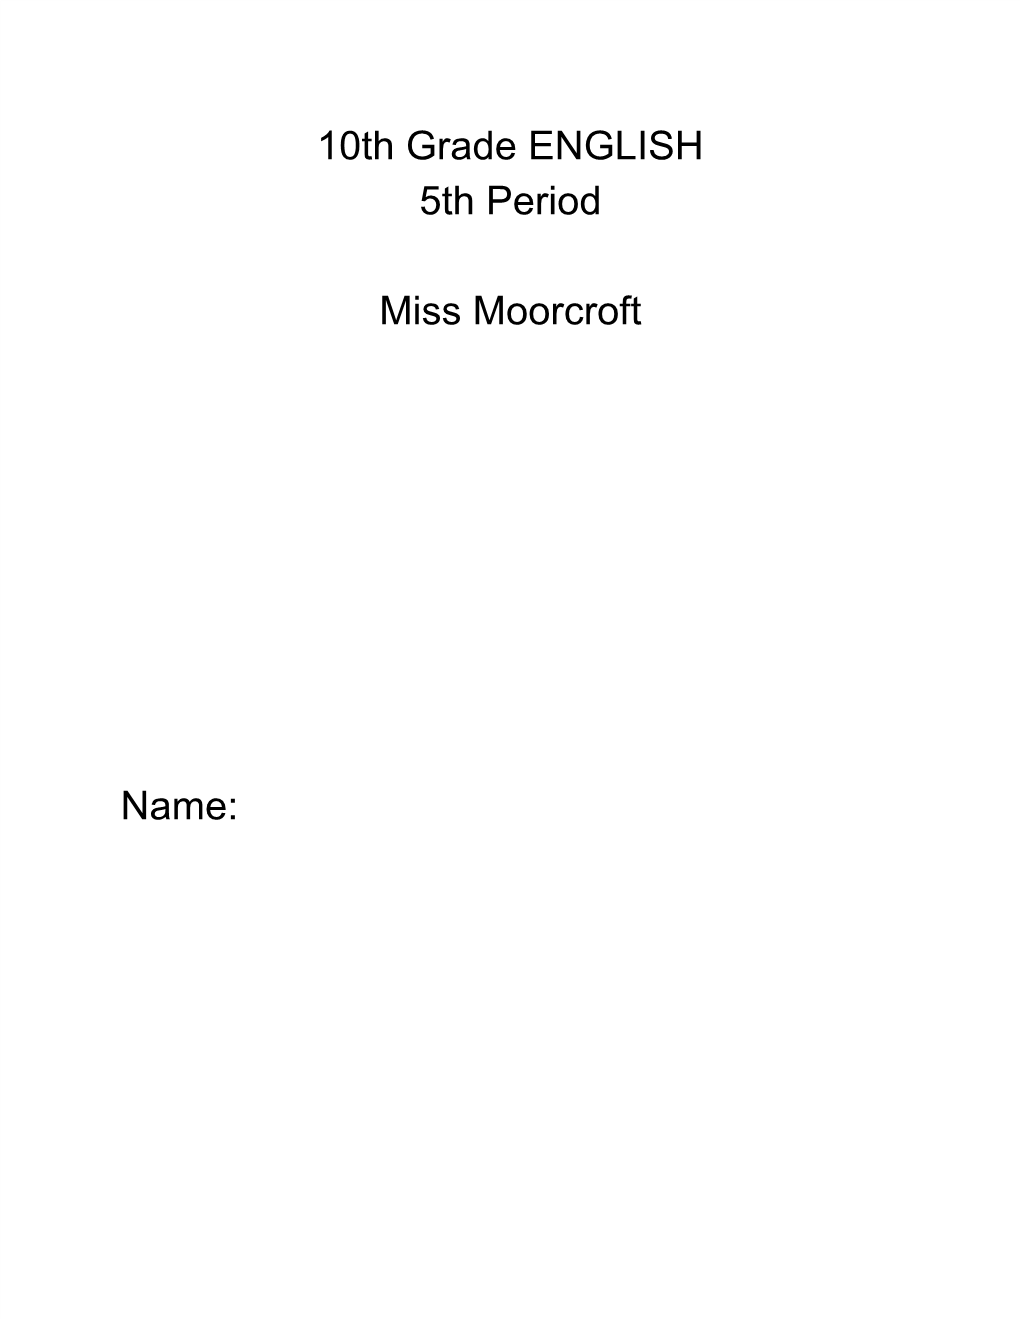 10Th Grade ENGLISH 5Th Period Miss Moorcroft Name